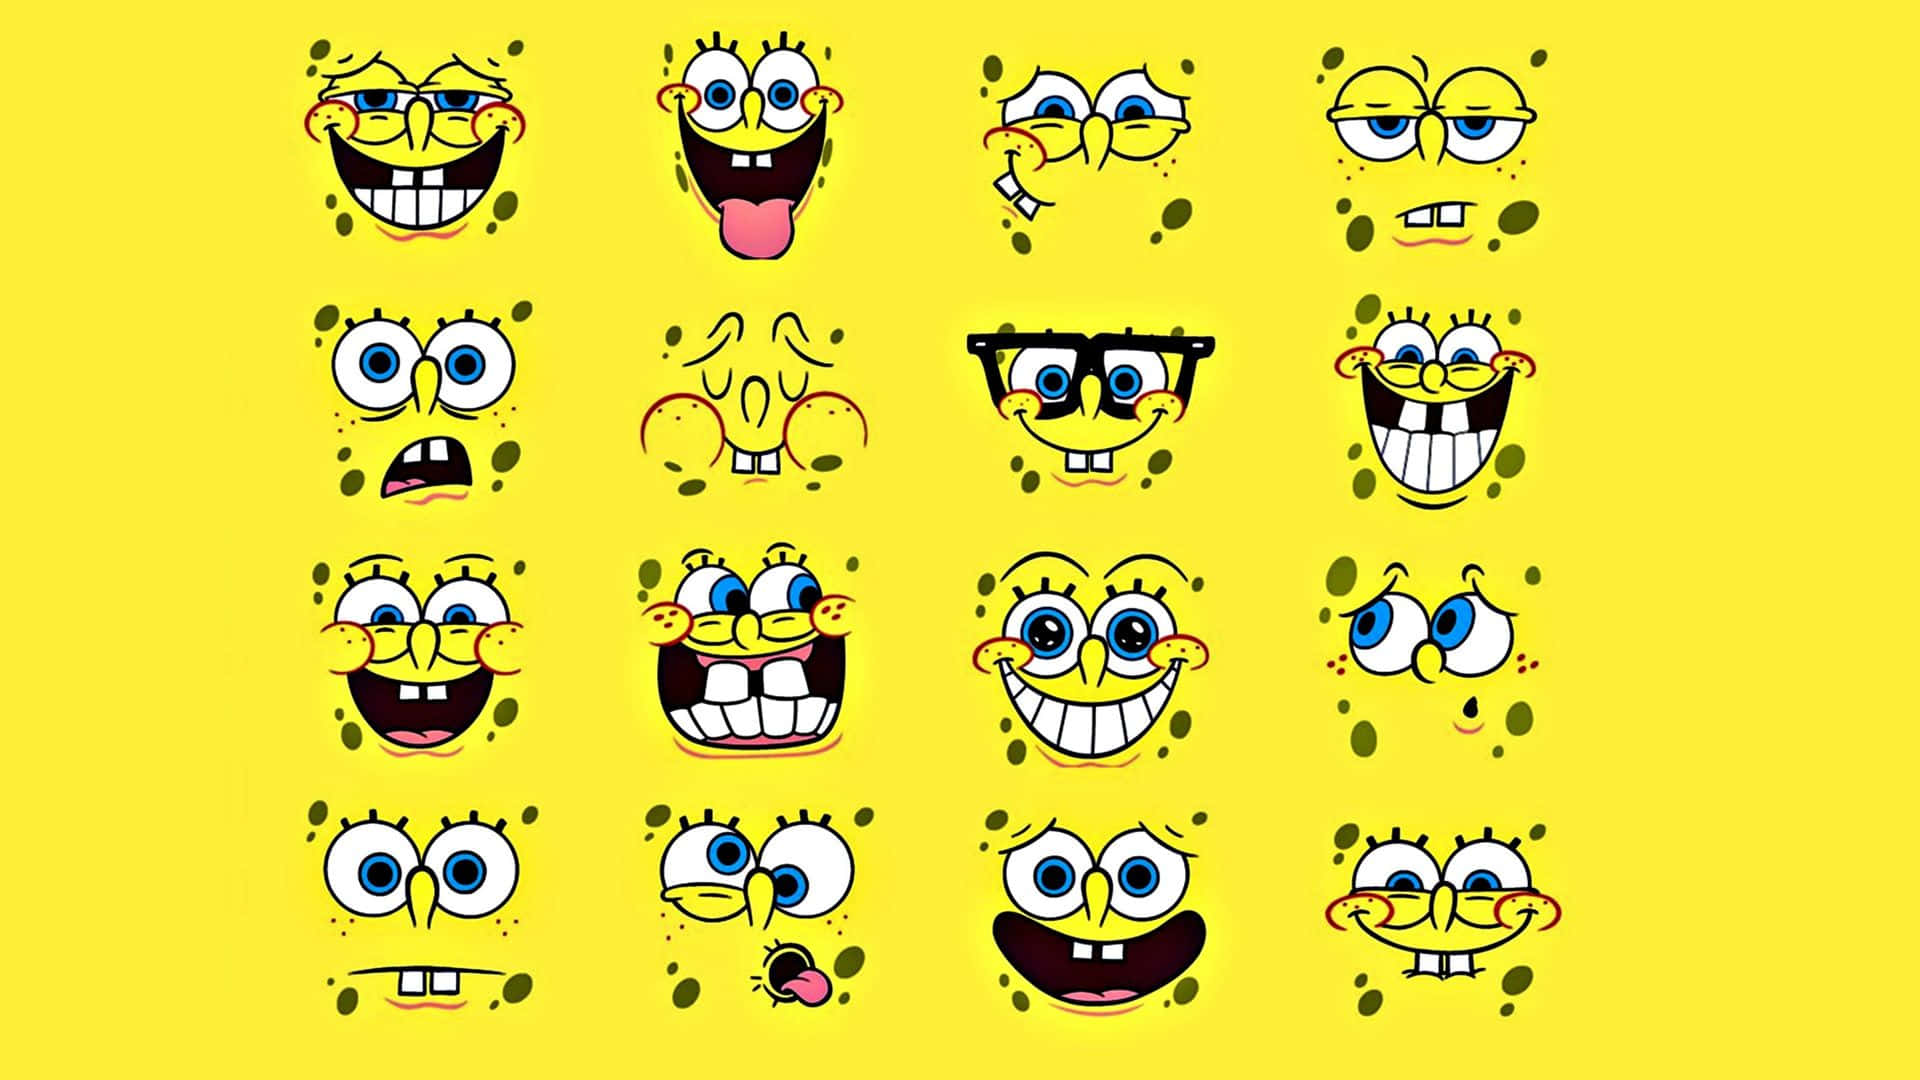 Spongebob's Desktop Ready For A Day Of Fun Background